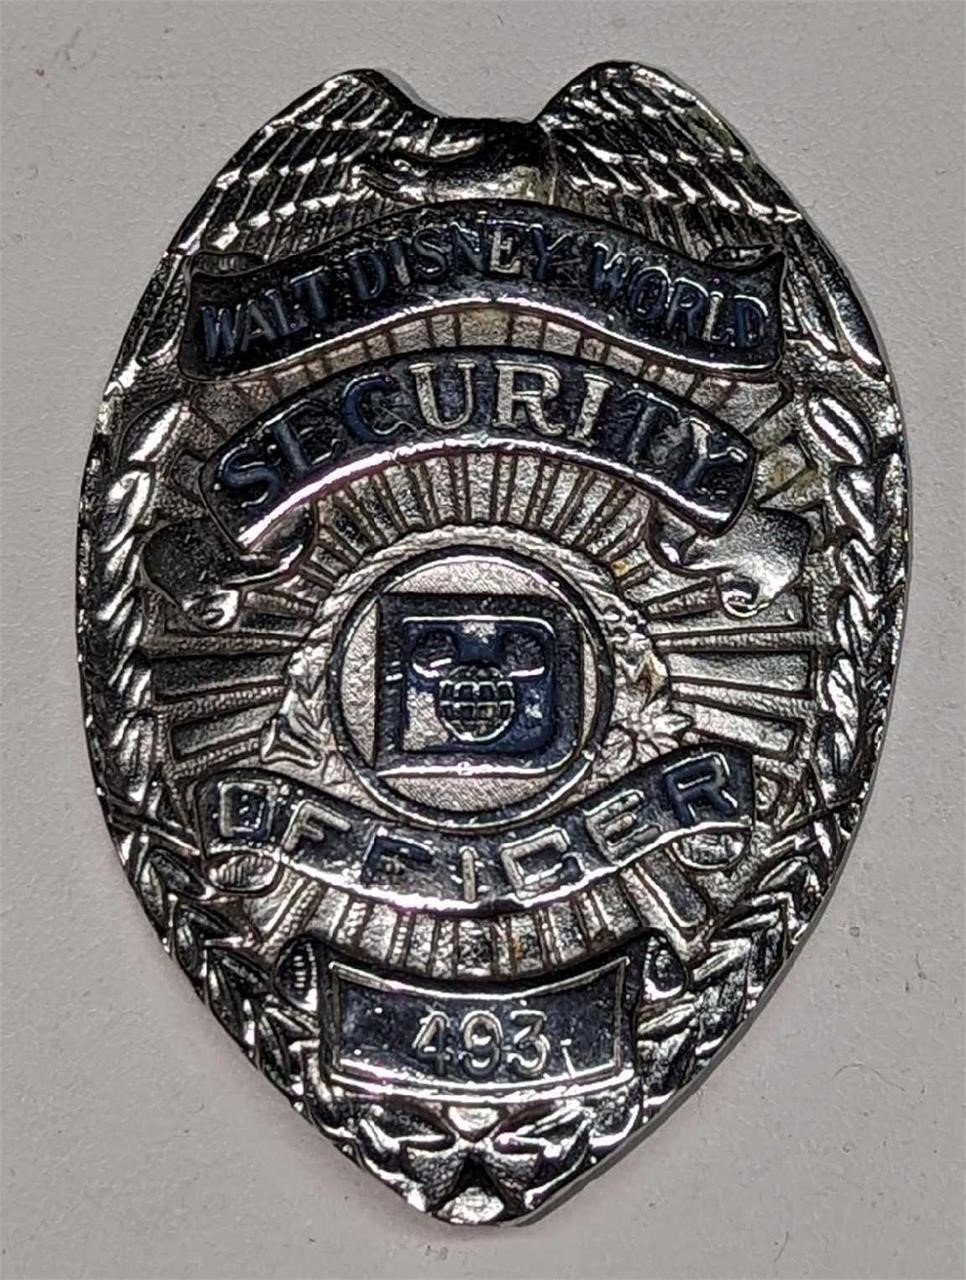 1970s/1980s Disney World Security Metal Badge 493